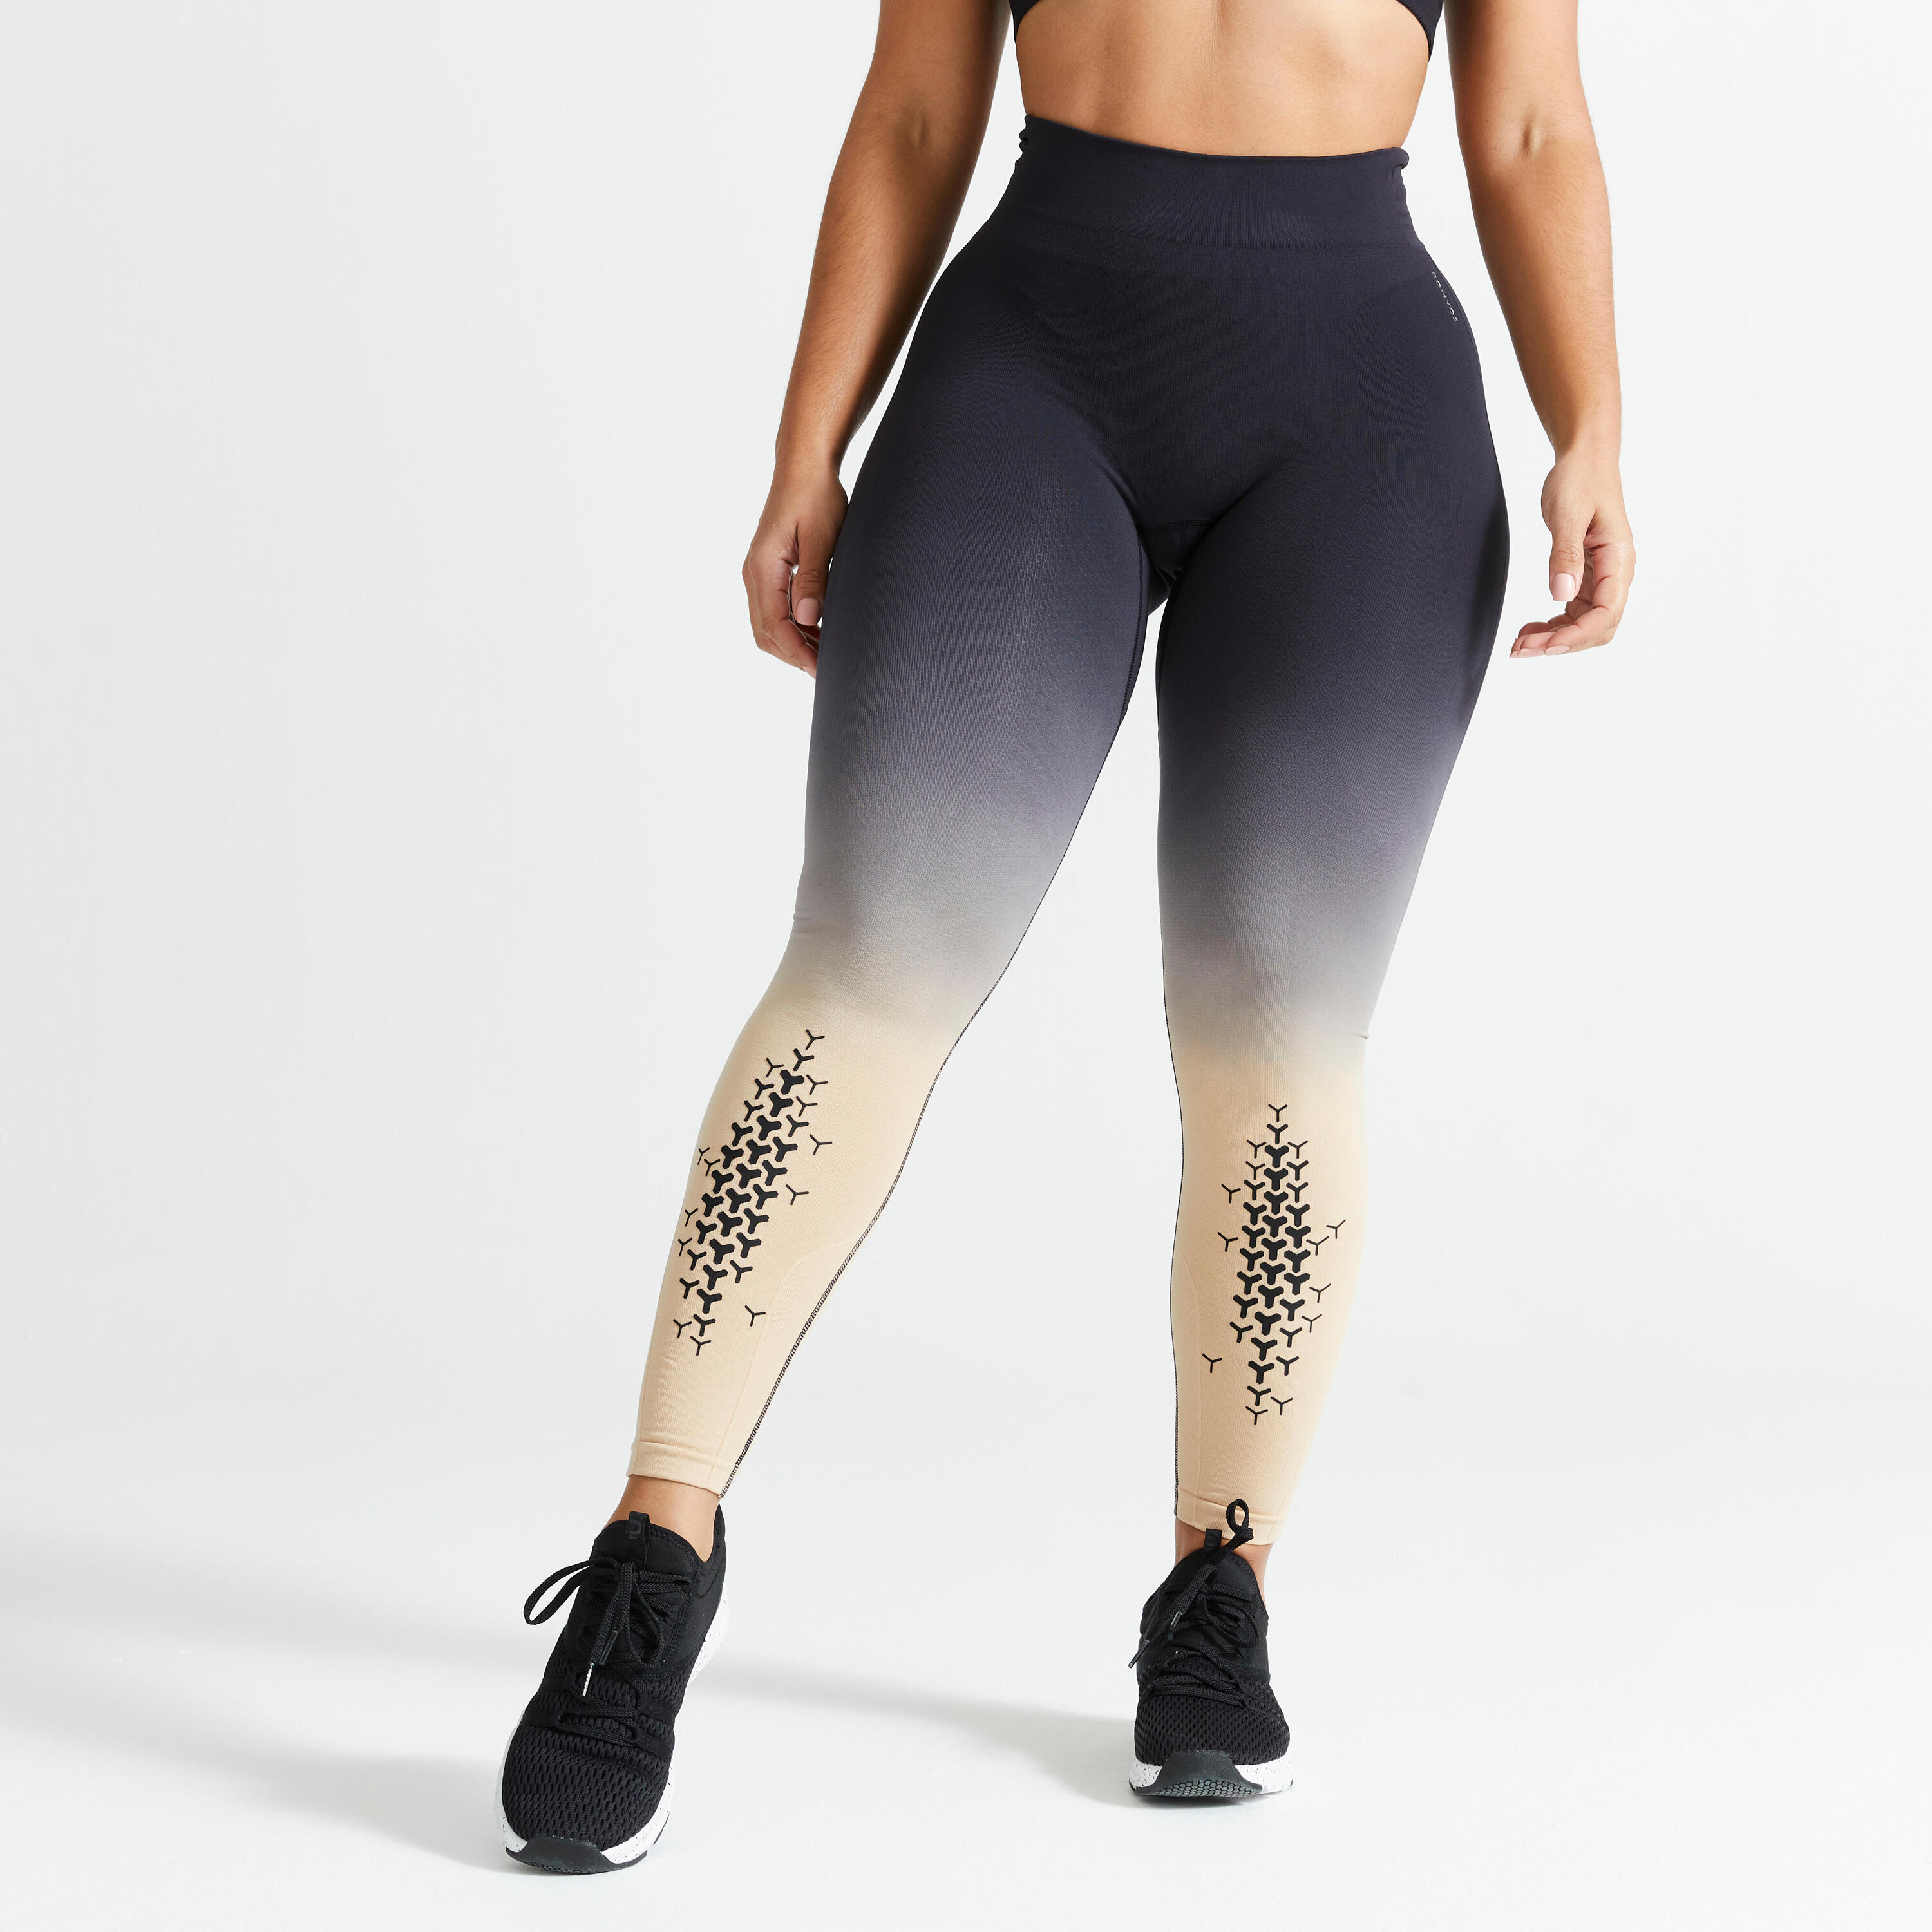 DOMYOS Women's Seamless Cross-Training Leggings - Beige/Black